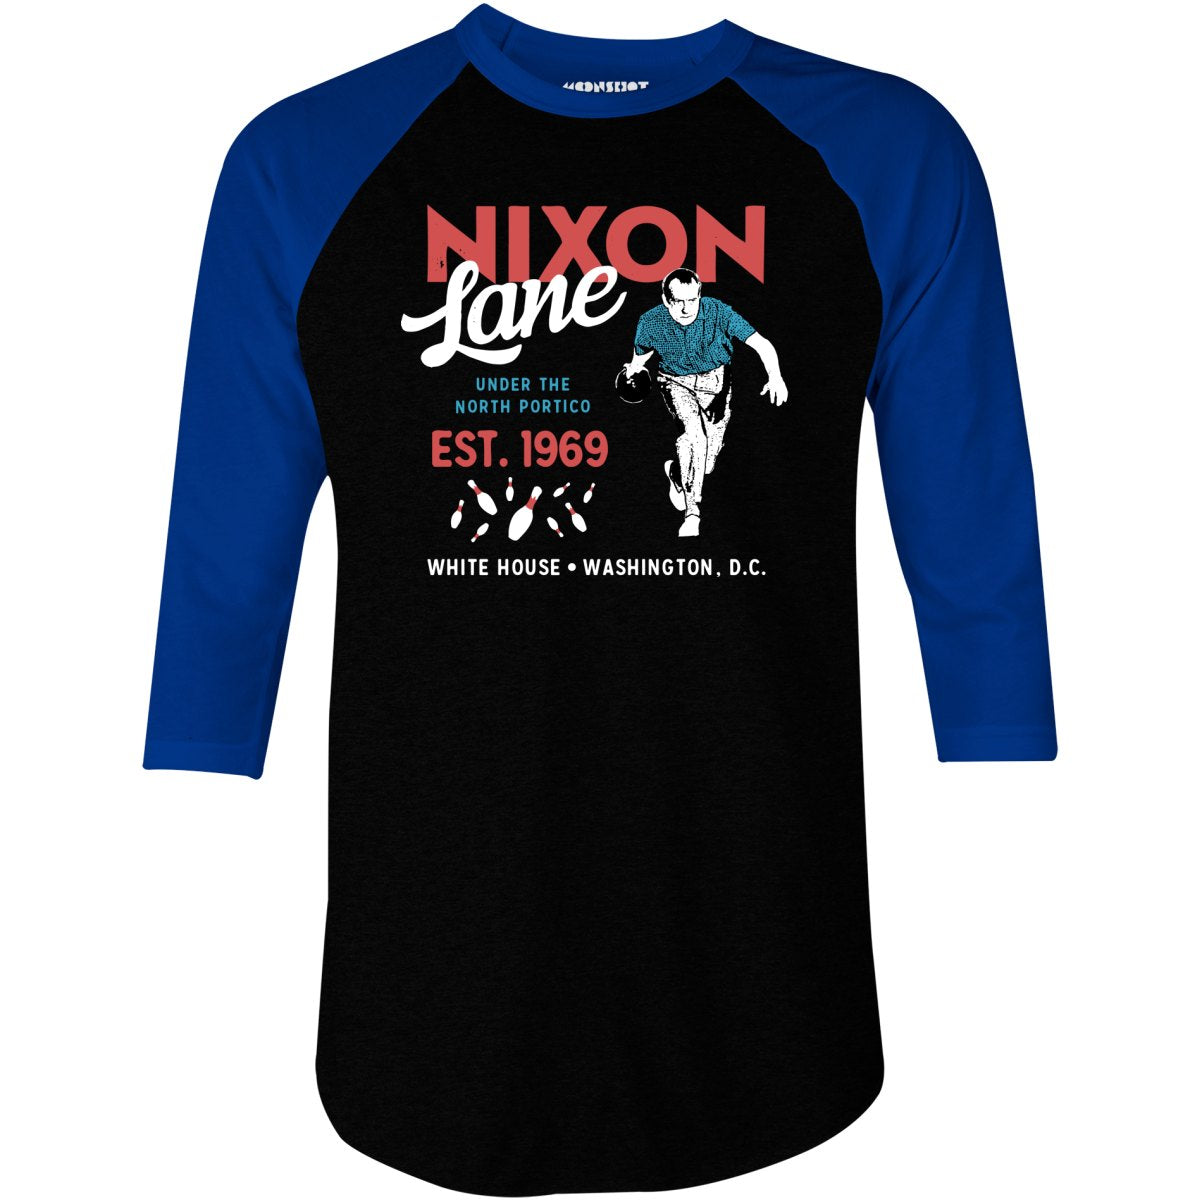 Nixon Lane - Washington D.C. - Vintage Bowling Alley - 3/4 Sleeve Raglan  T-Shirt